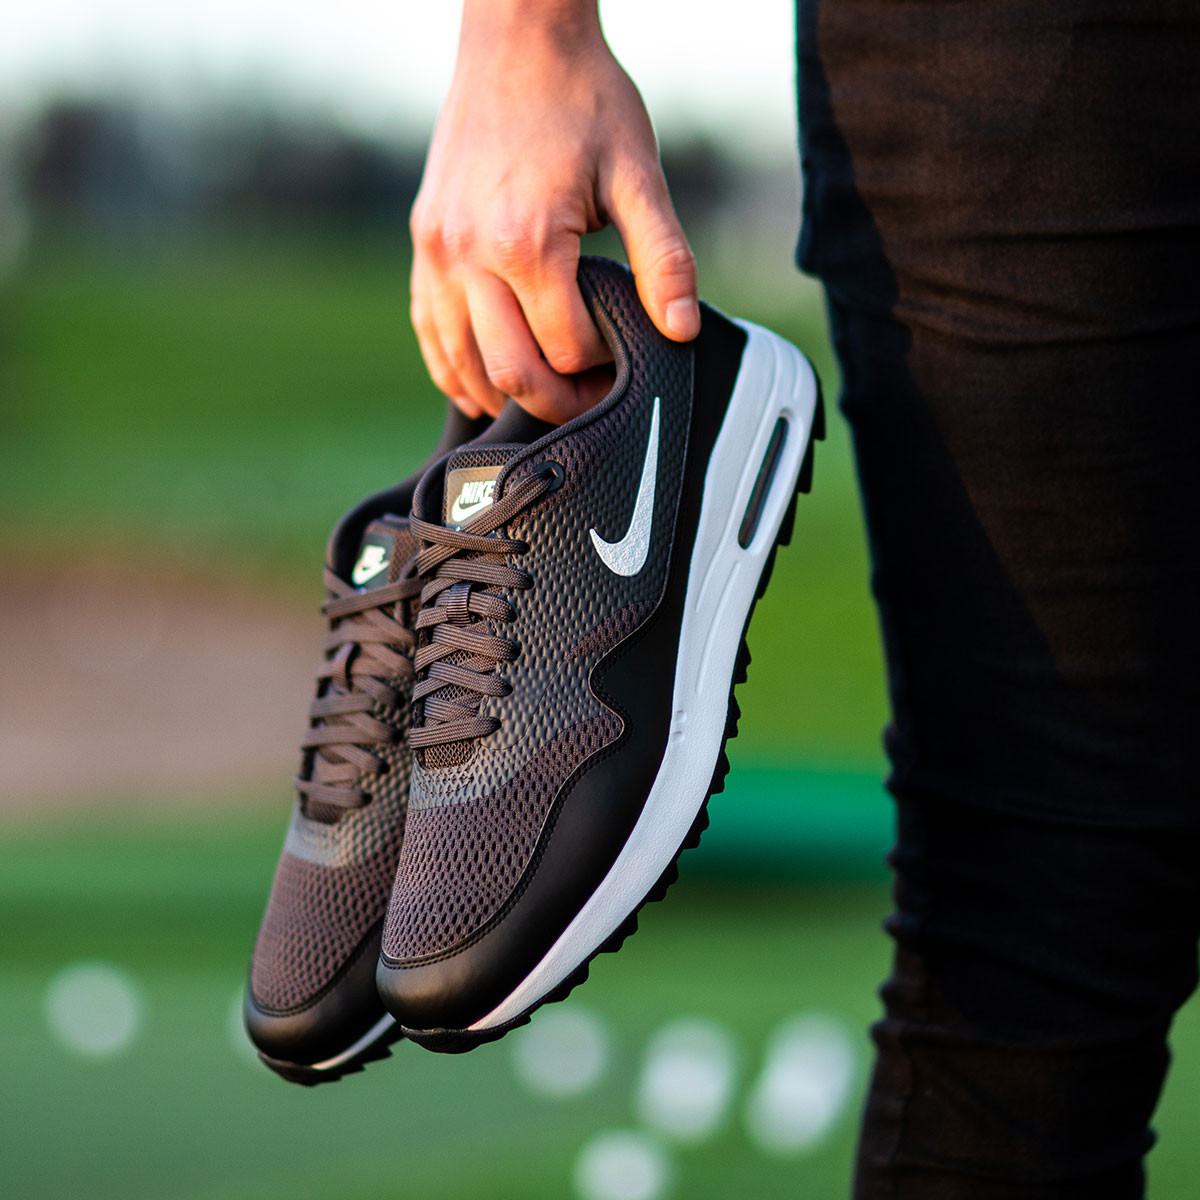 Achat/Vente chaussures de golf Nike - ChaussuresDeGolf.com